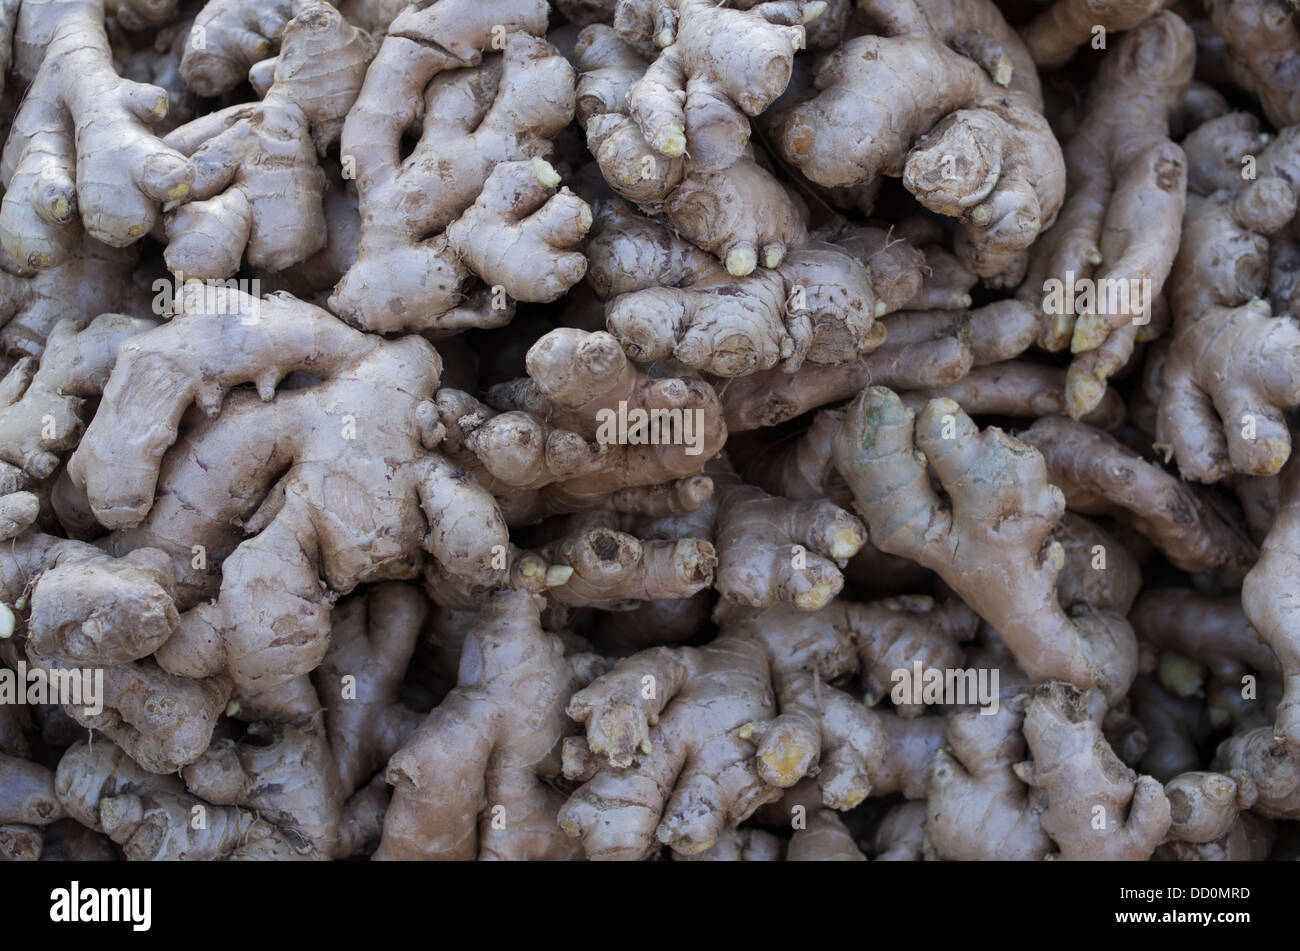 Raíces de jengibre a la venta en el mercado de Sardar, Rajashtan - Jodhpur, India Foto de stock